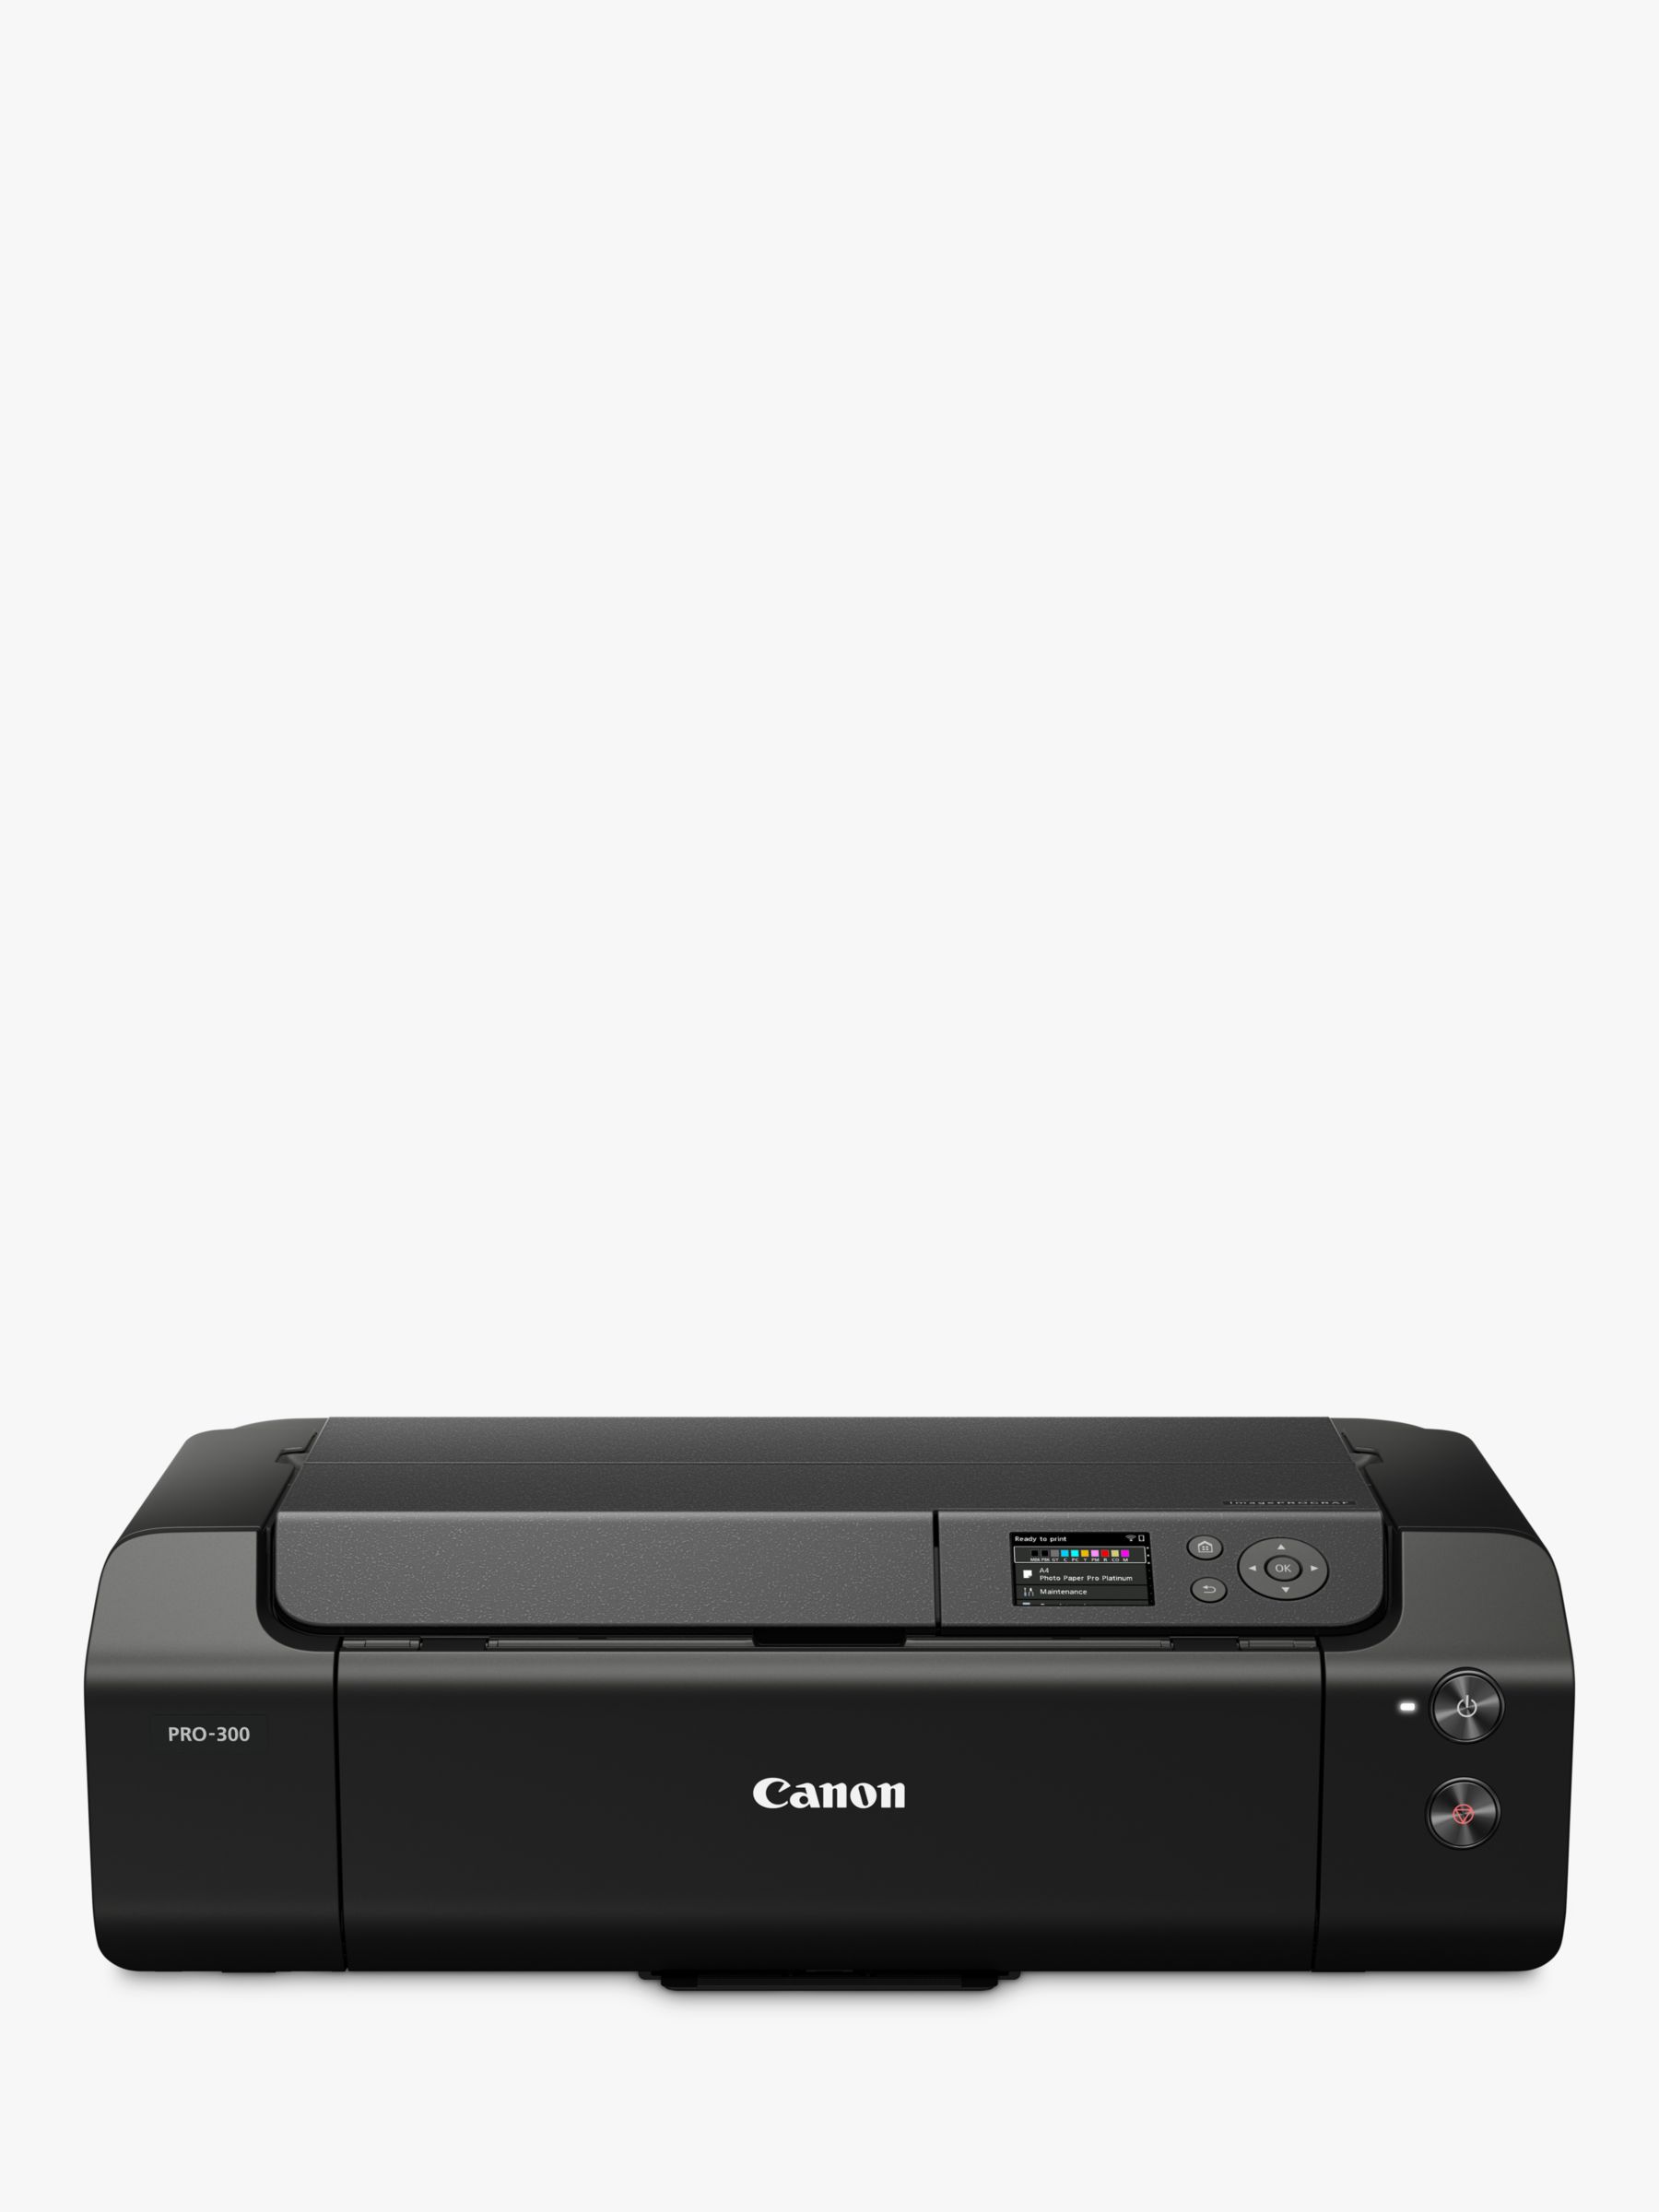 Canon PIXMA PRO-10S - Inkjet Photo Printers - Canon Europe